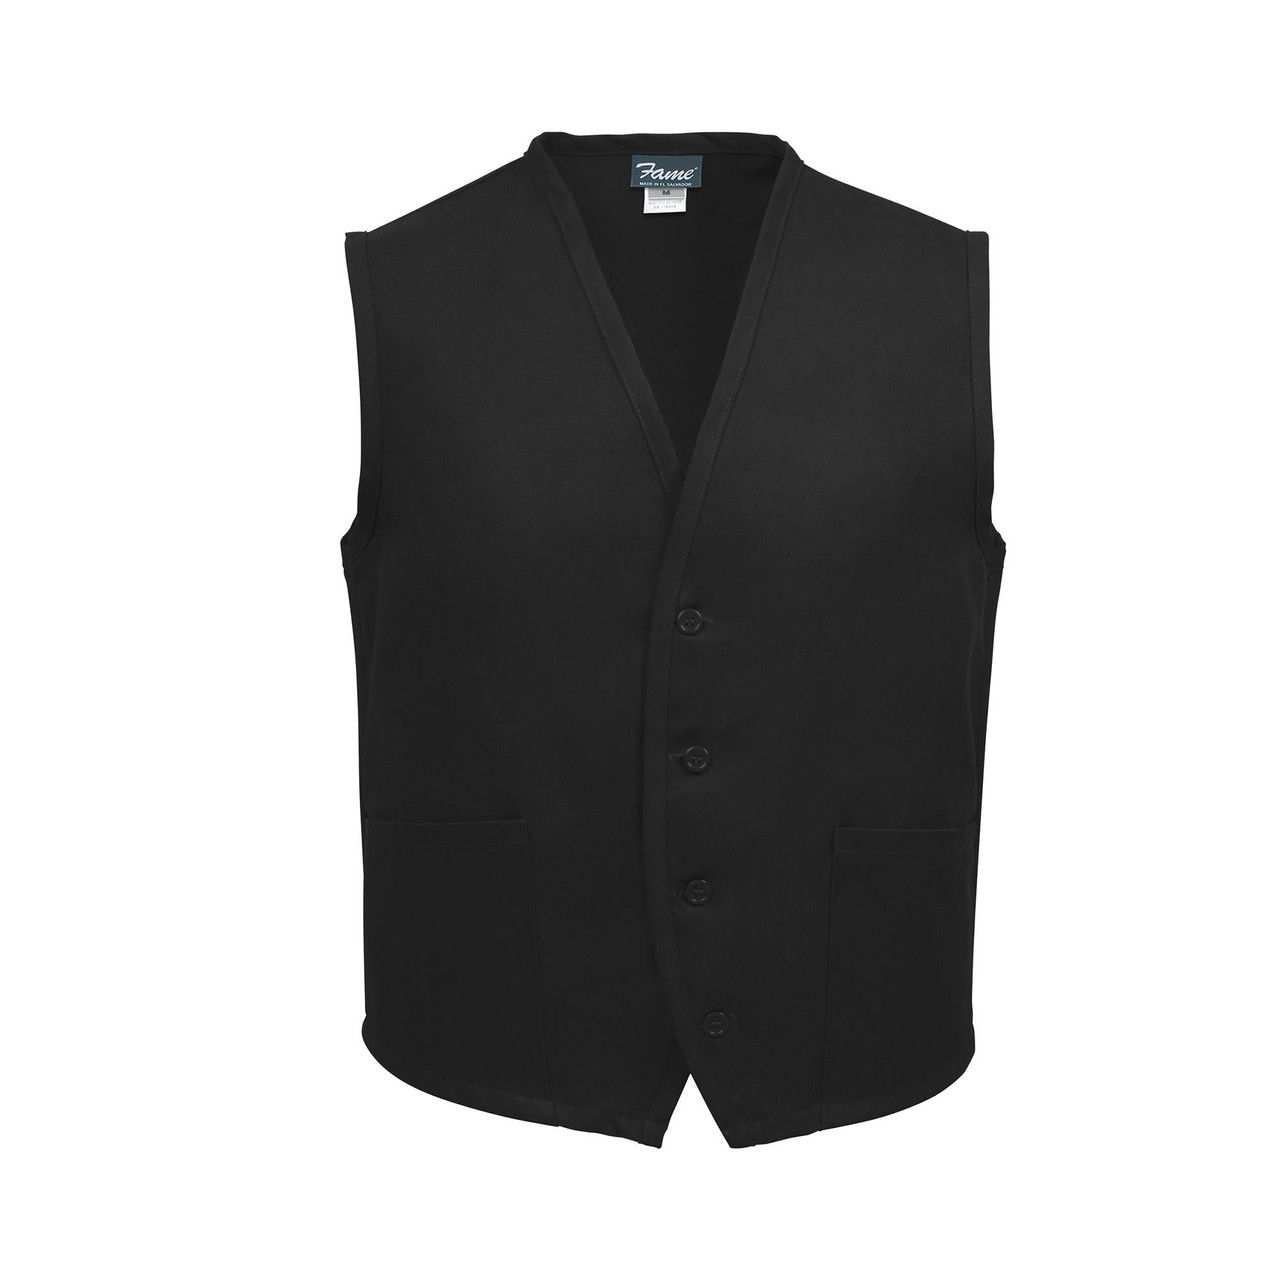 Do uniform vests with pockets enhance the utility of the Professional Unisex Vest?